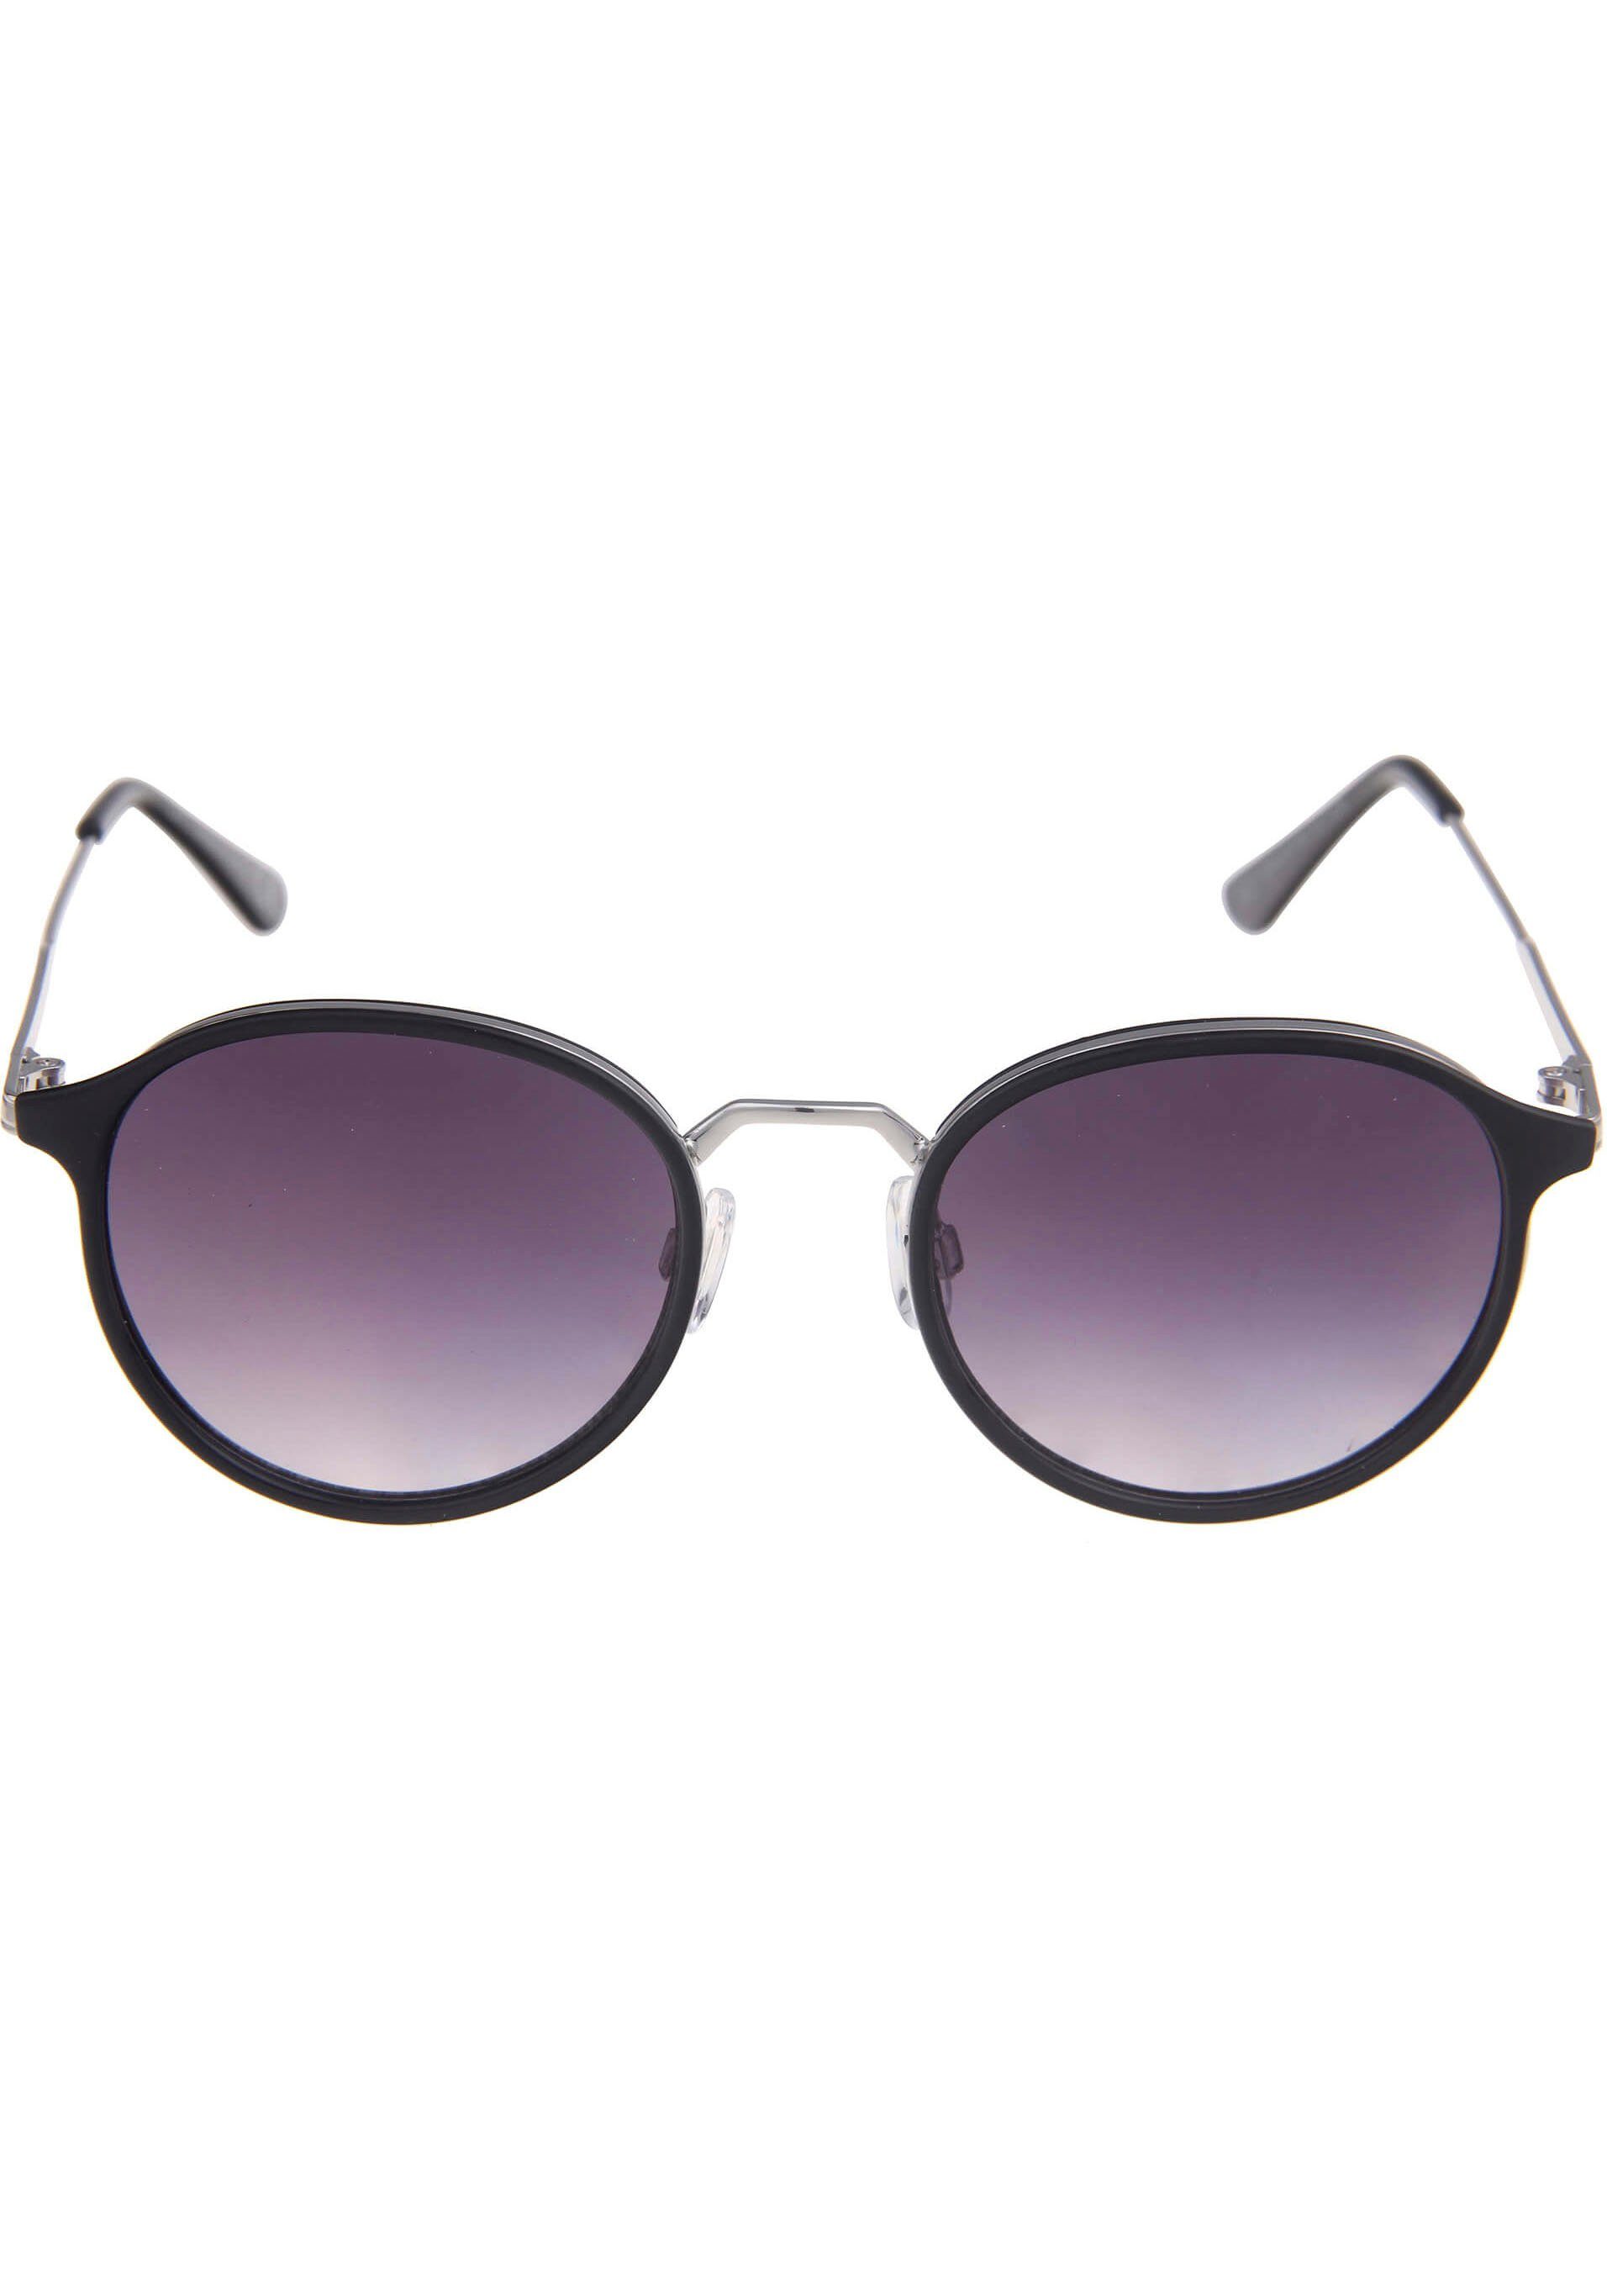 leslii Sonnenbrille, Klassische Sonnenbrille